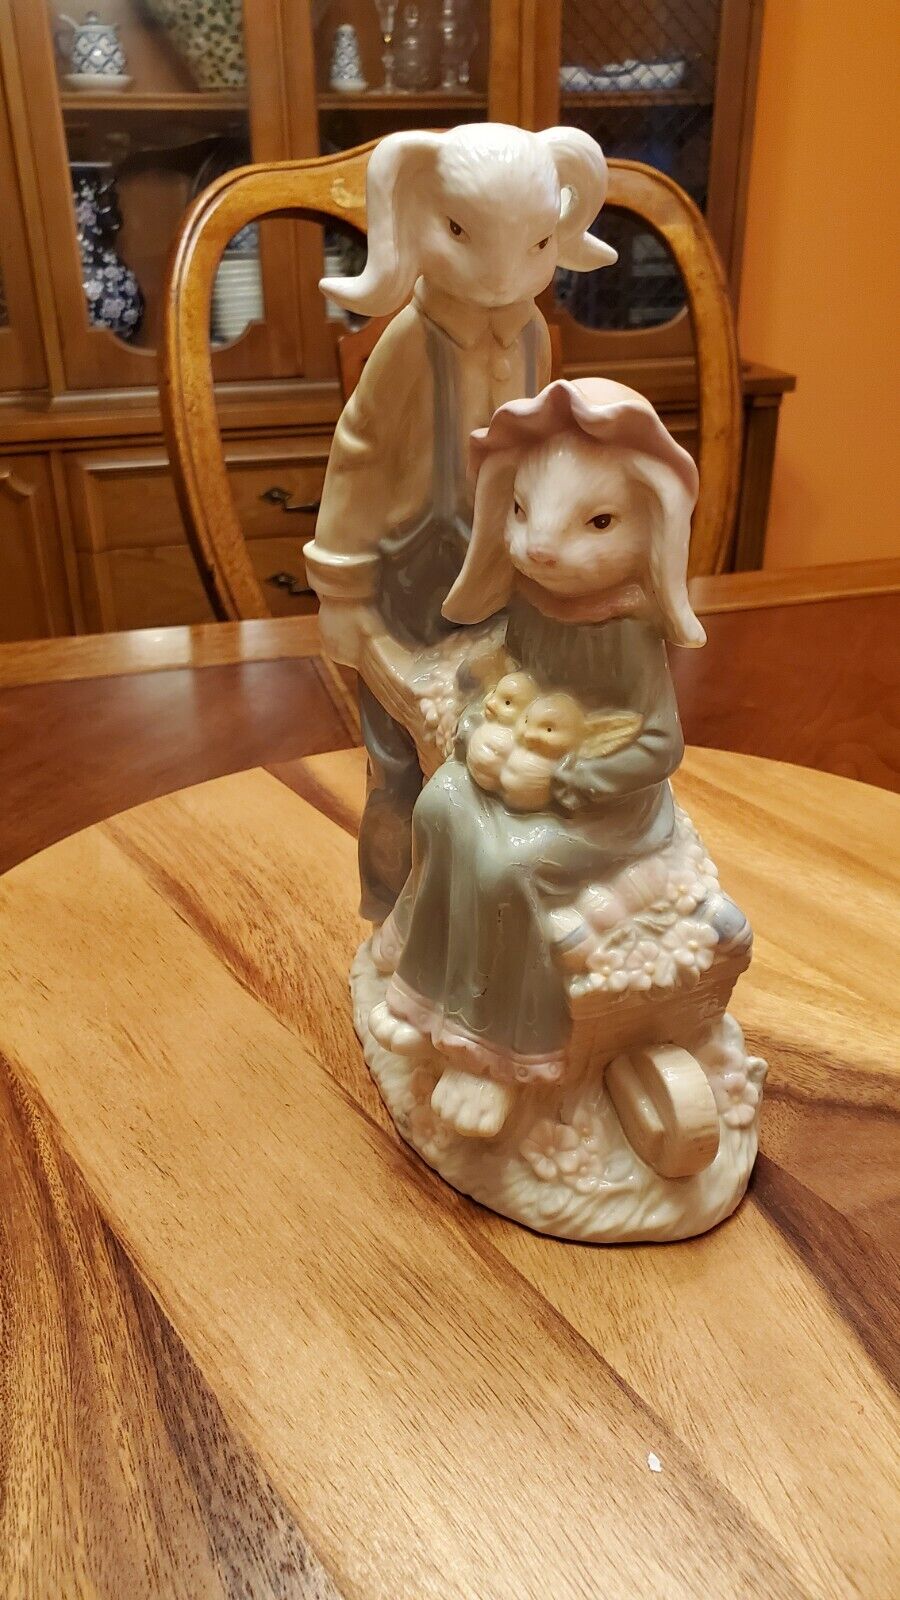 NWOT- Vintage porcelain Easter bunnies with wheelbarrow